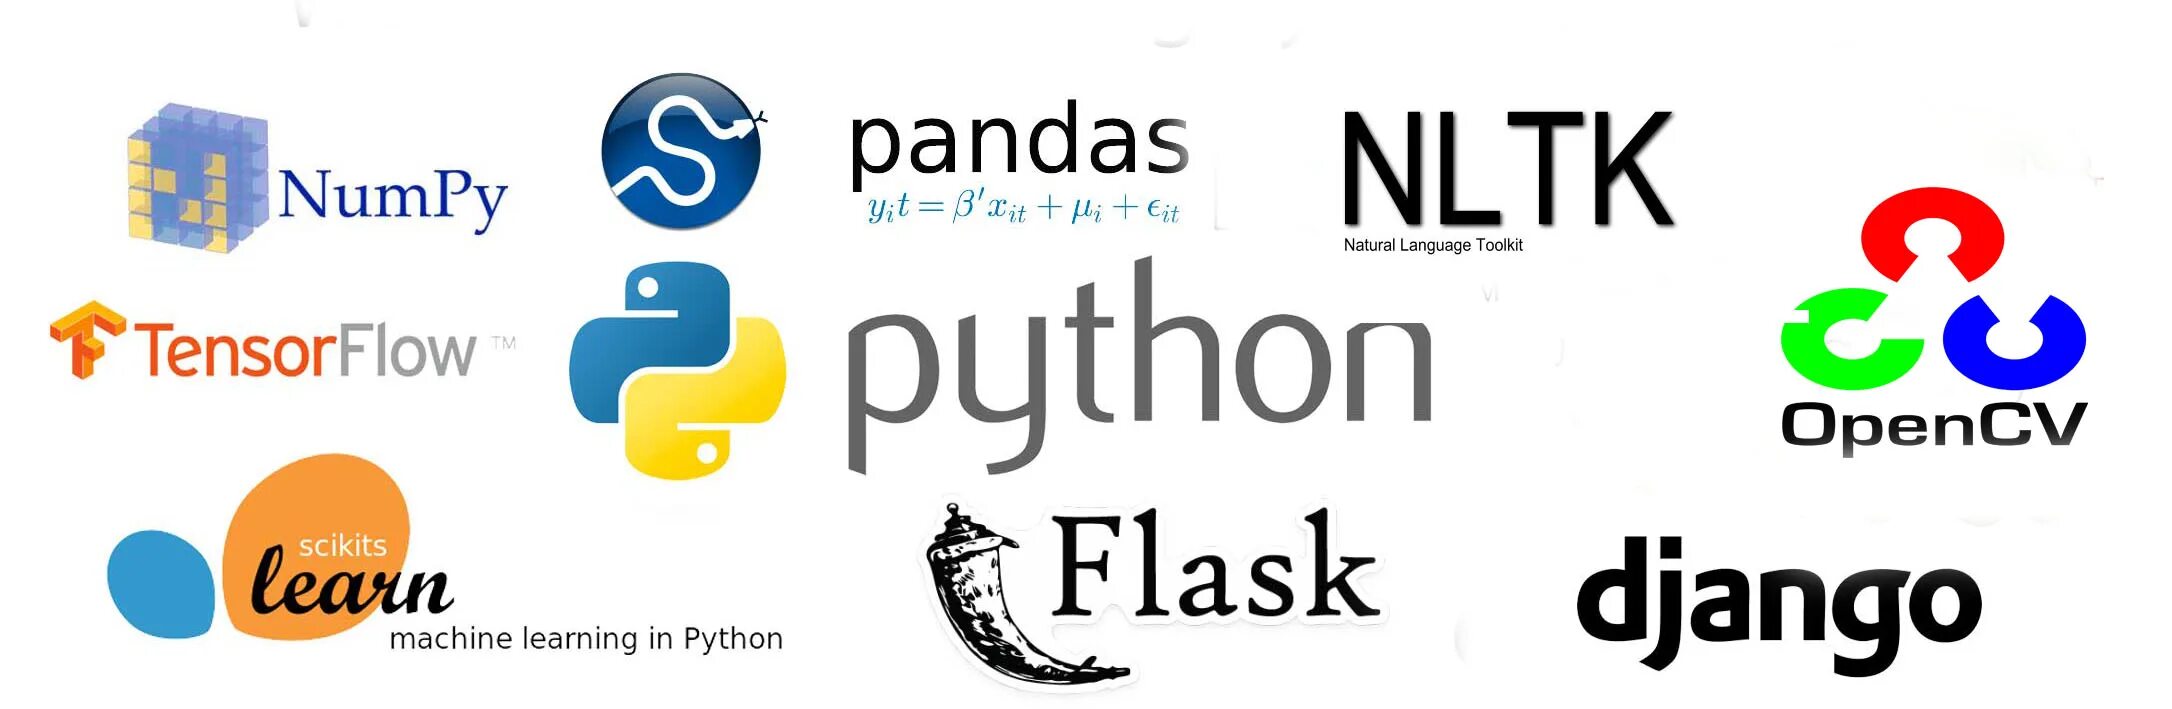 Питон NLTK. NLTK (natural language Toolkit). NLTK NLP. NLTK logo. Spacy python